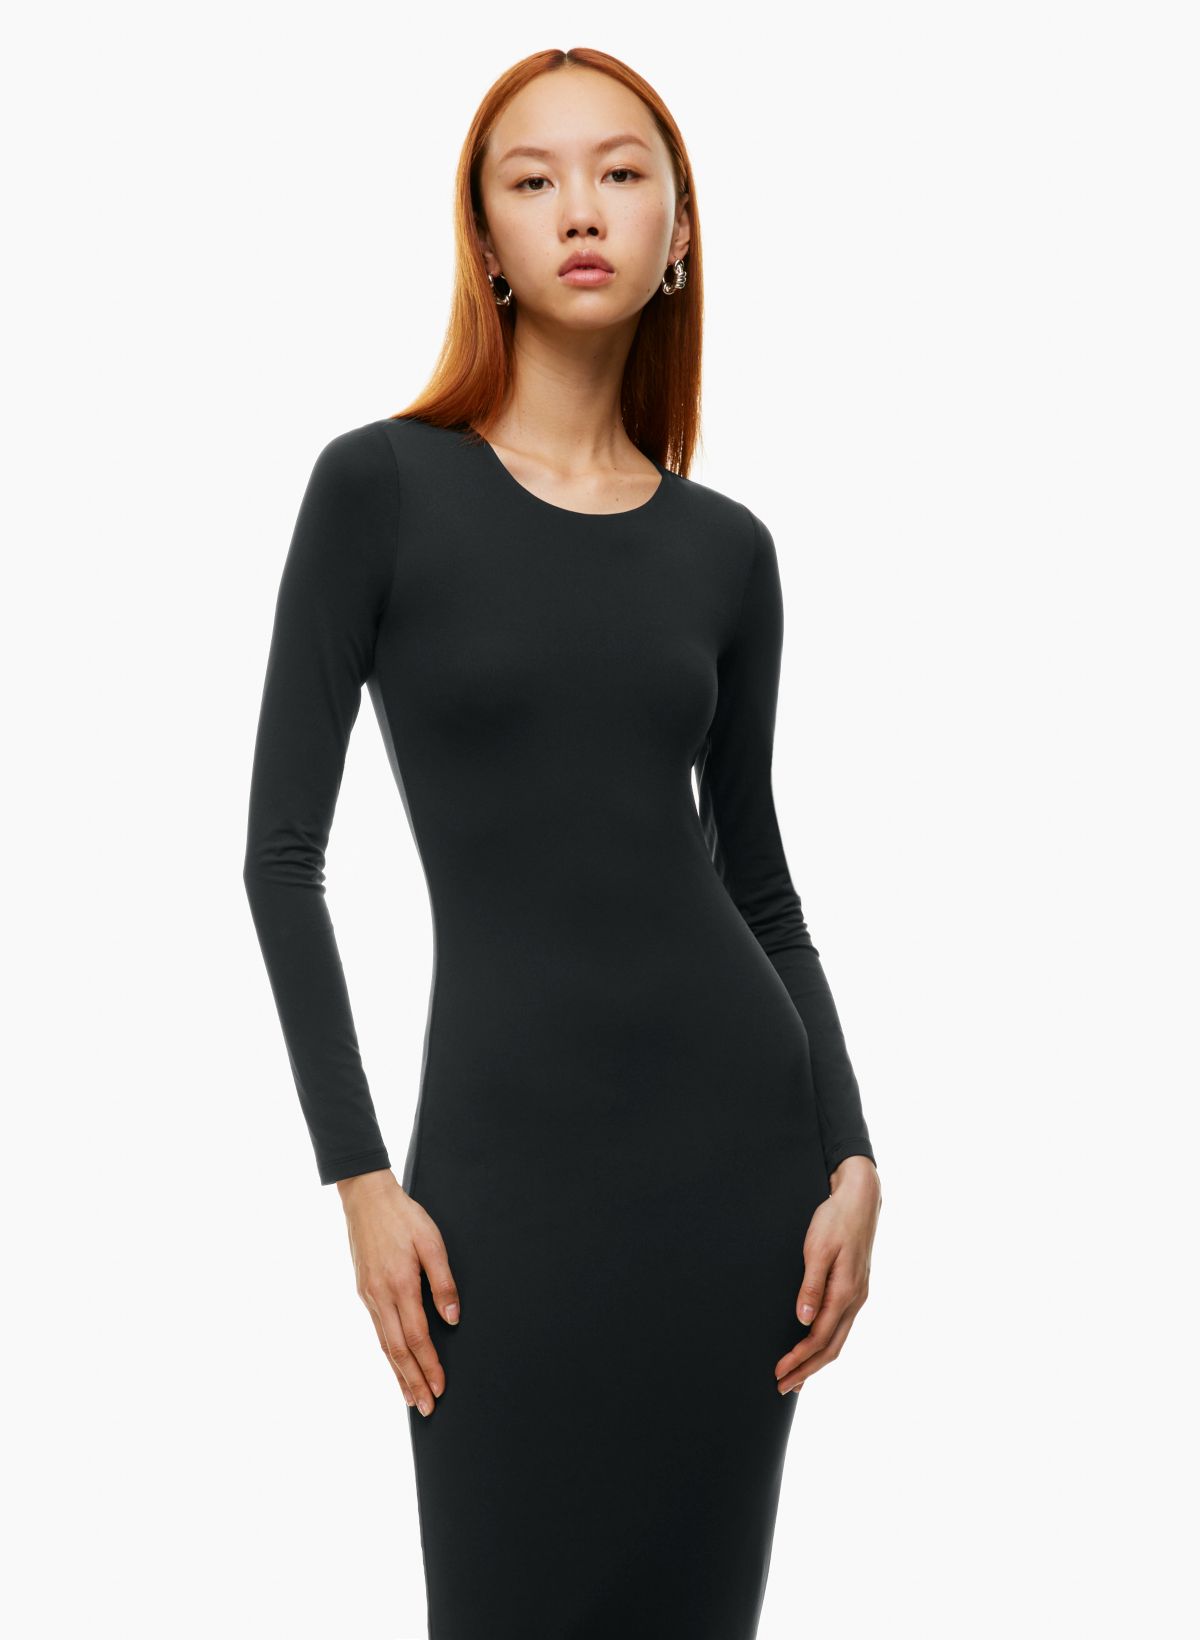 Women's Mini Dress - Bodycon Fit Tube / Scoop Neckline / Short Sleeves /  Black